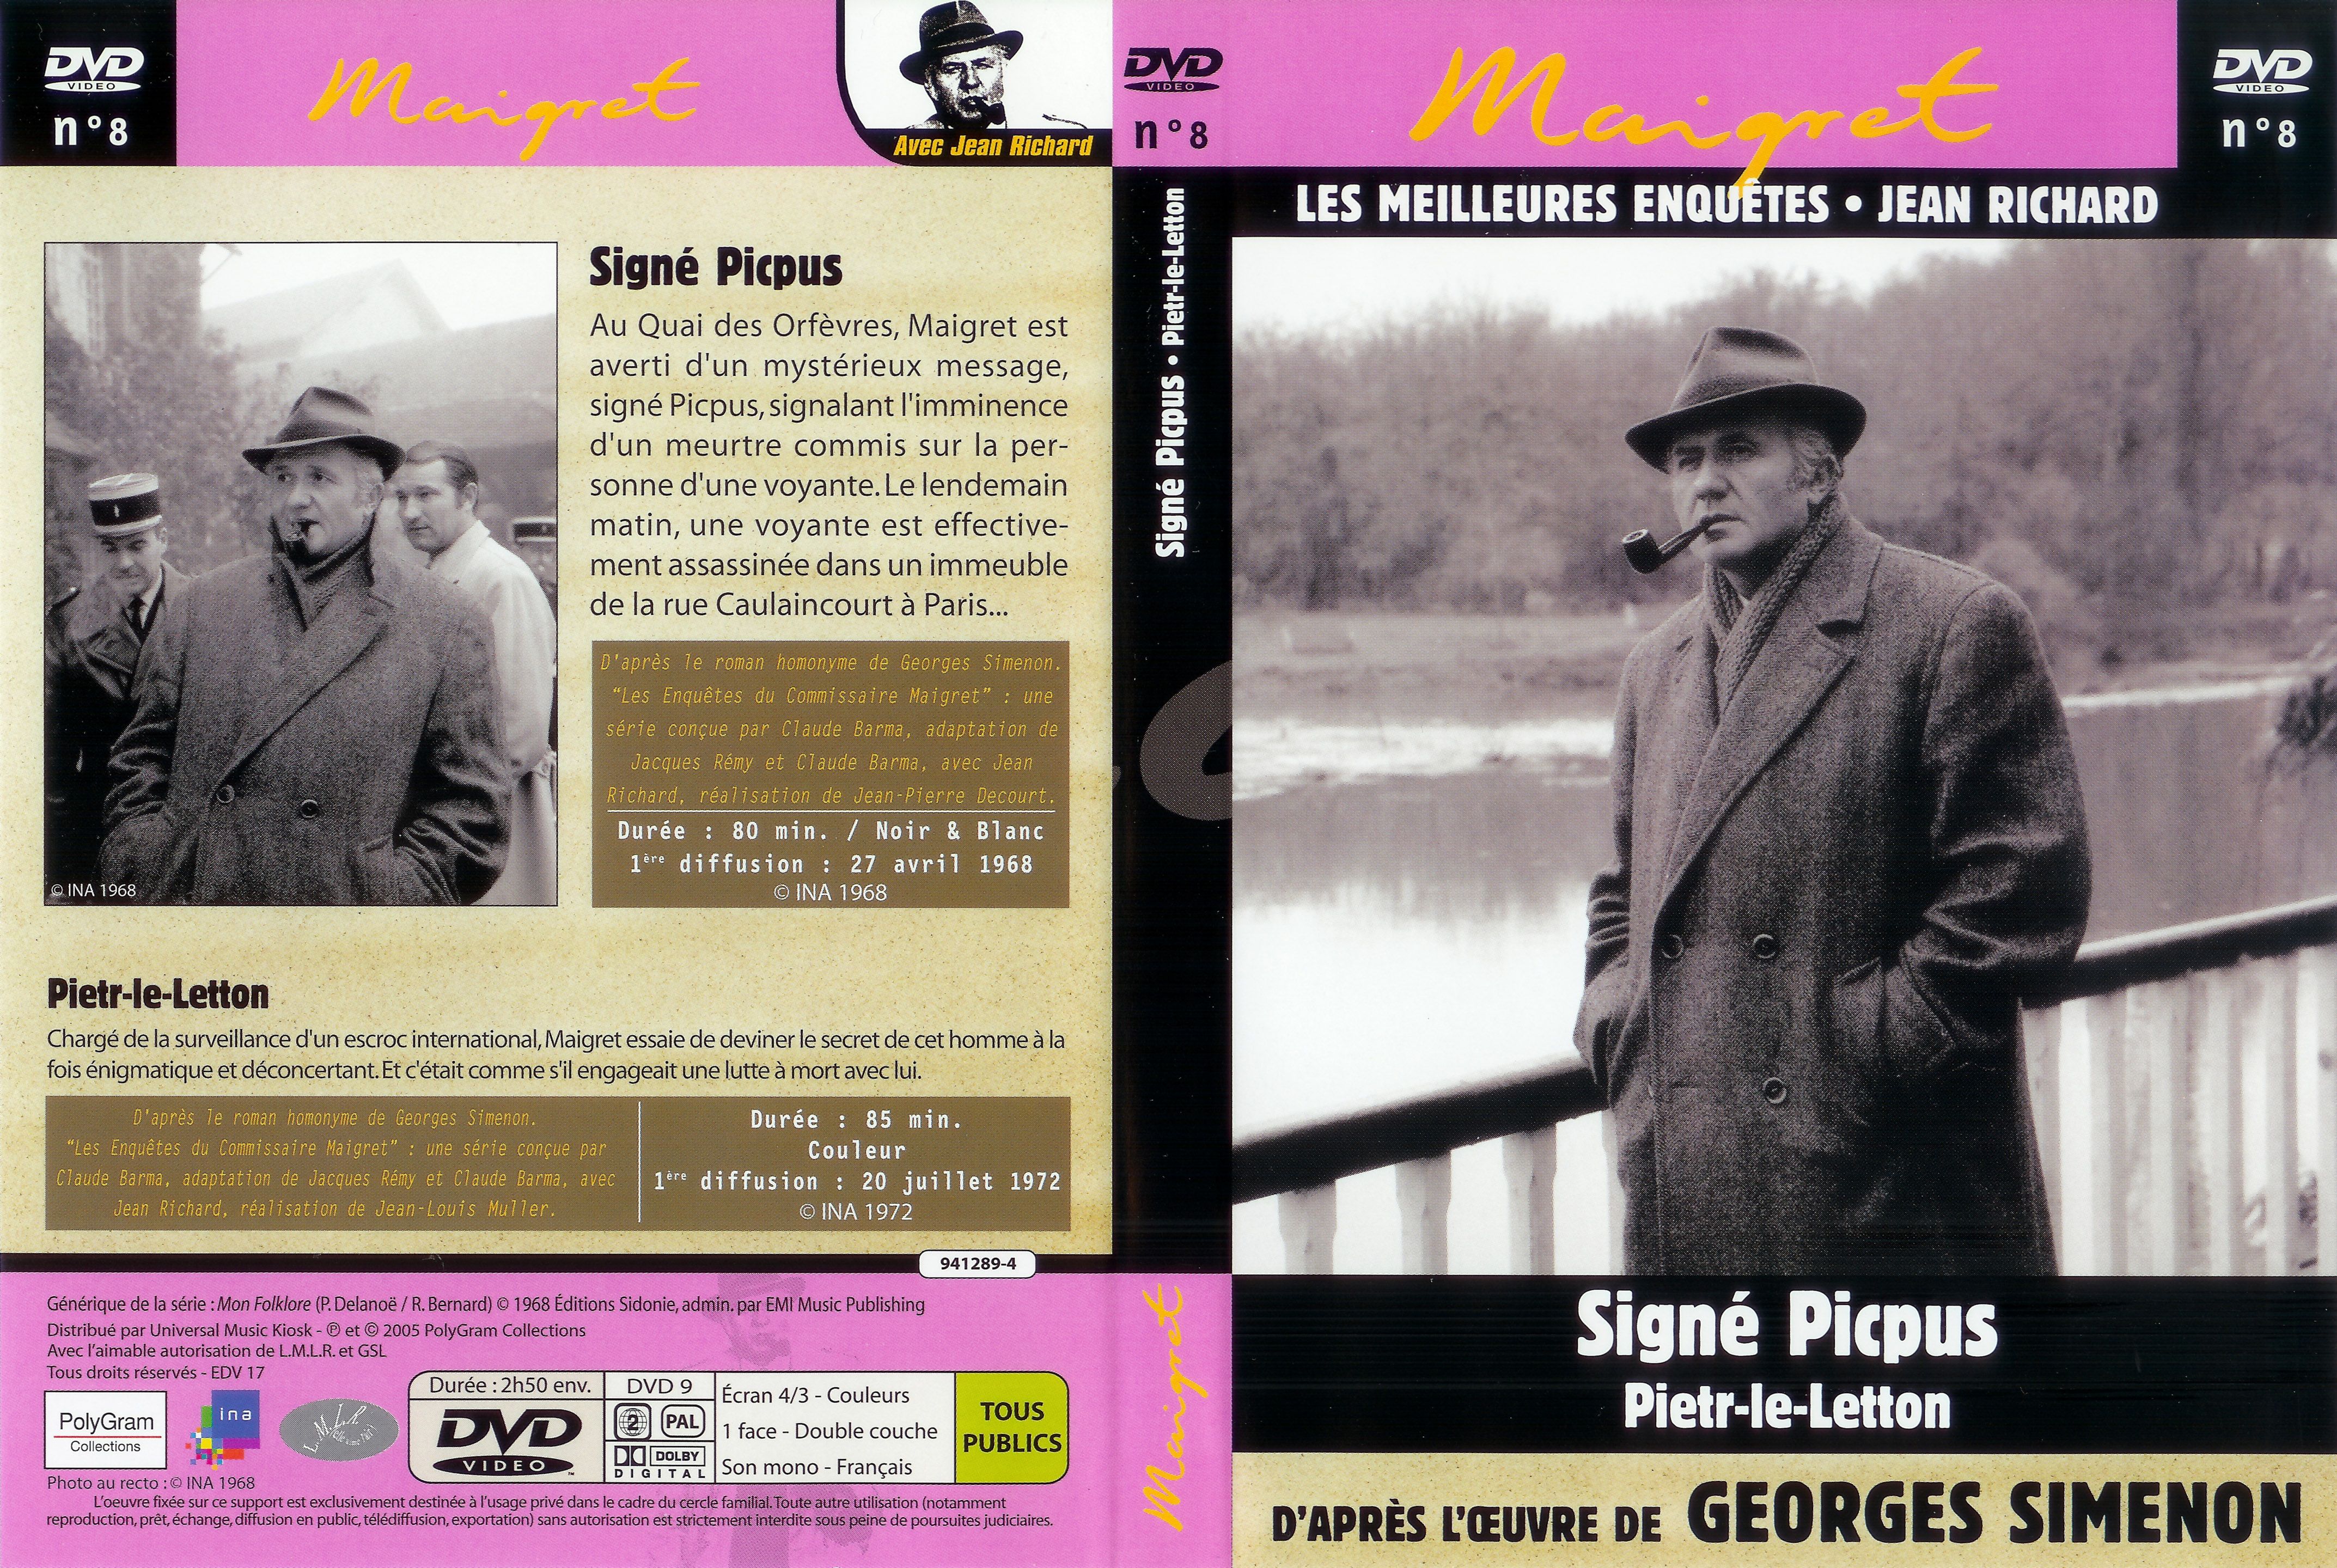 Jaquette DVD Maigret (Jean Richard) vol 08